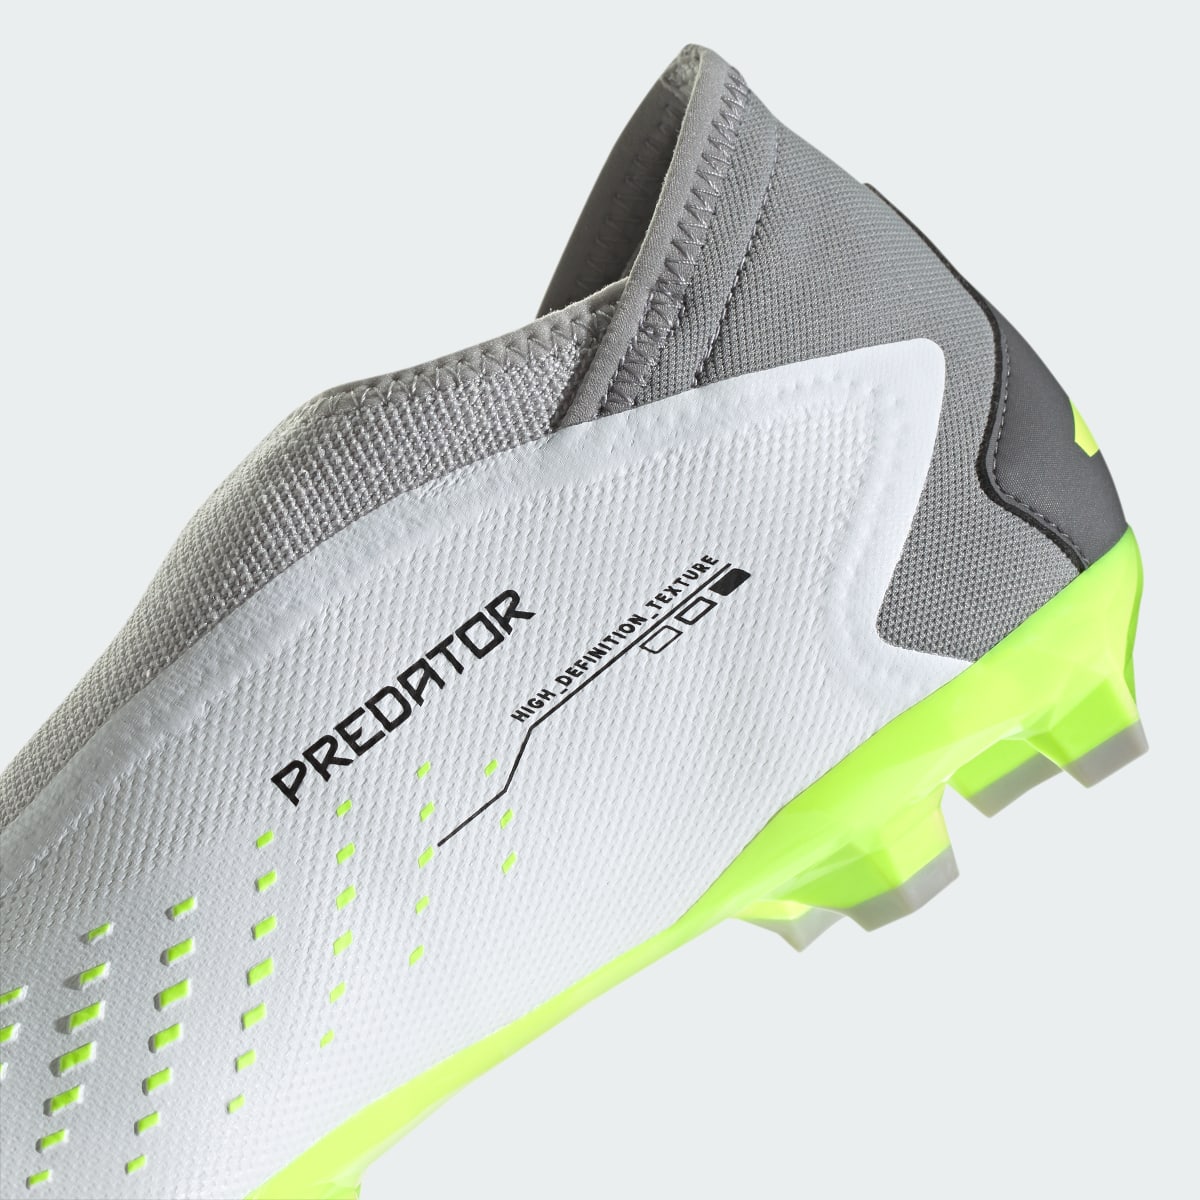 Adidas Botas de Futebol Sem Atacadores Predator Accuracy.3 – Piso firme. 9